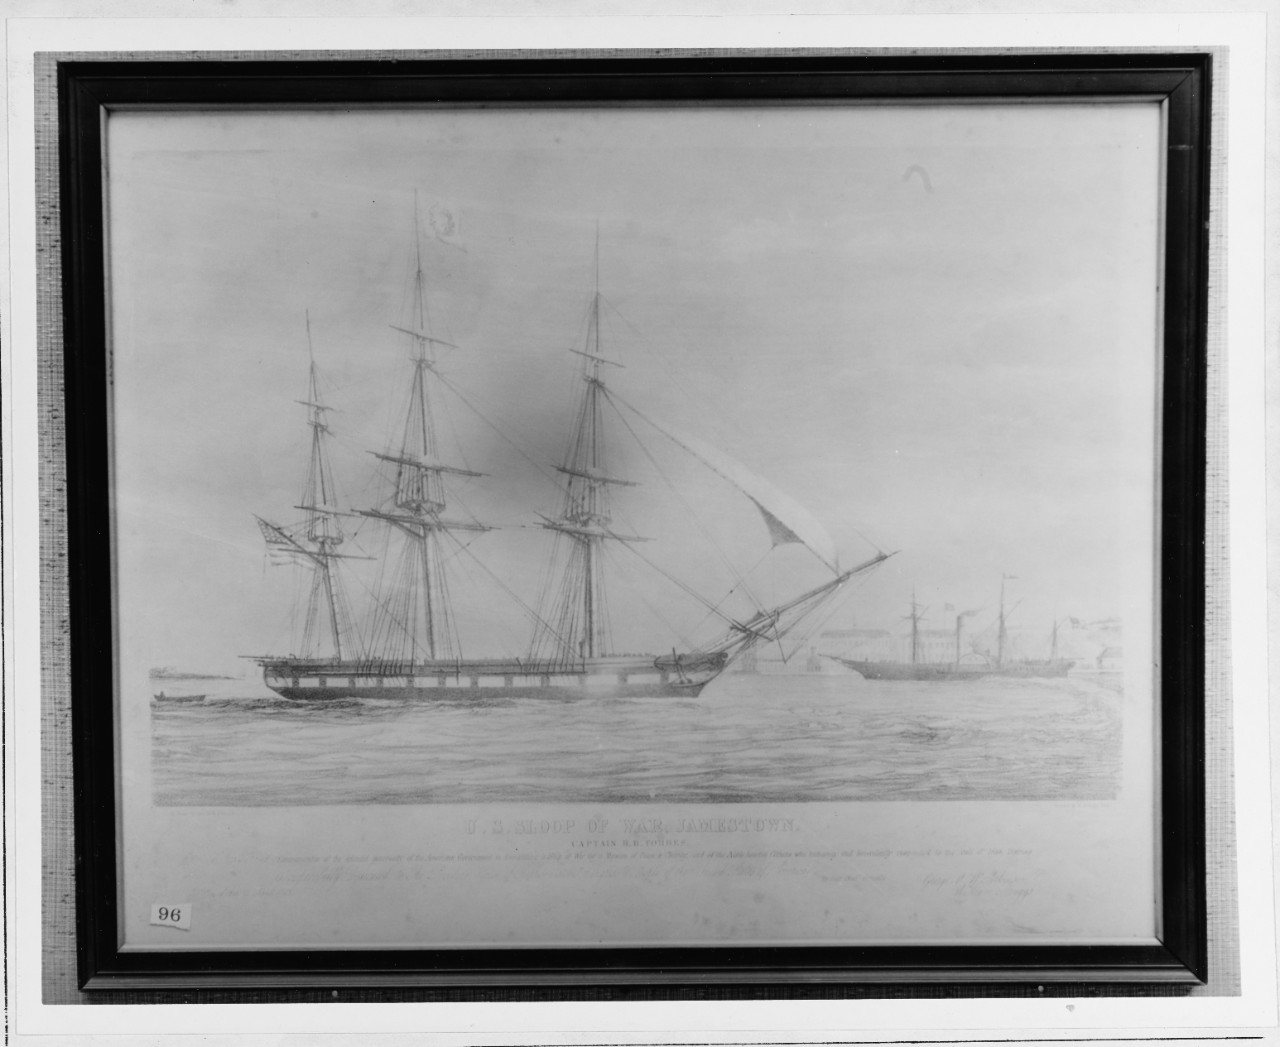 USS JAMESTOWN (1843-1912)